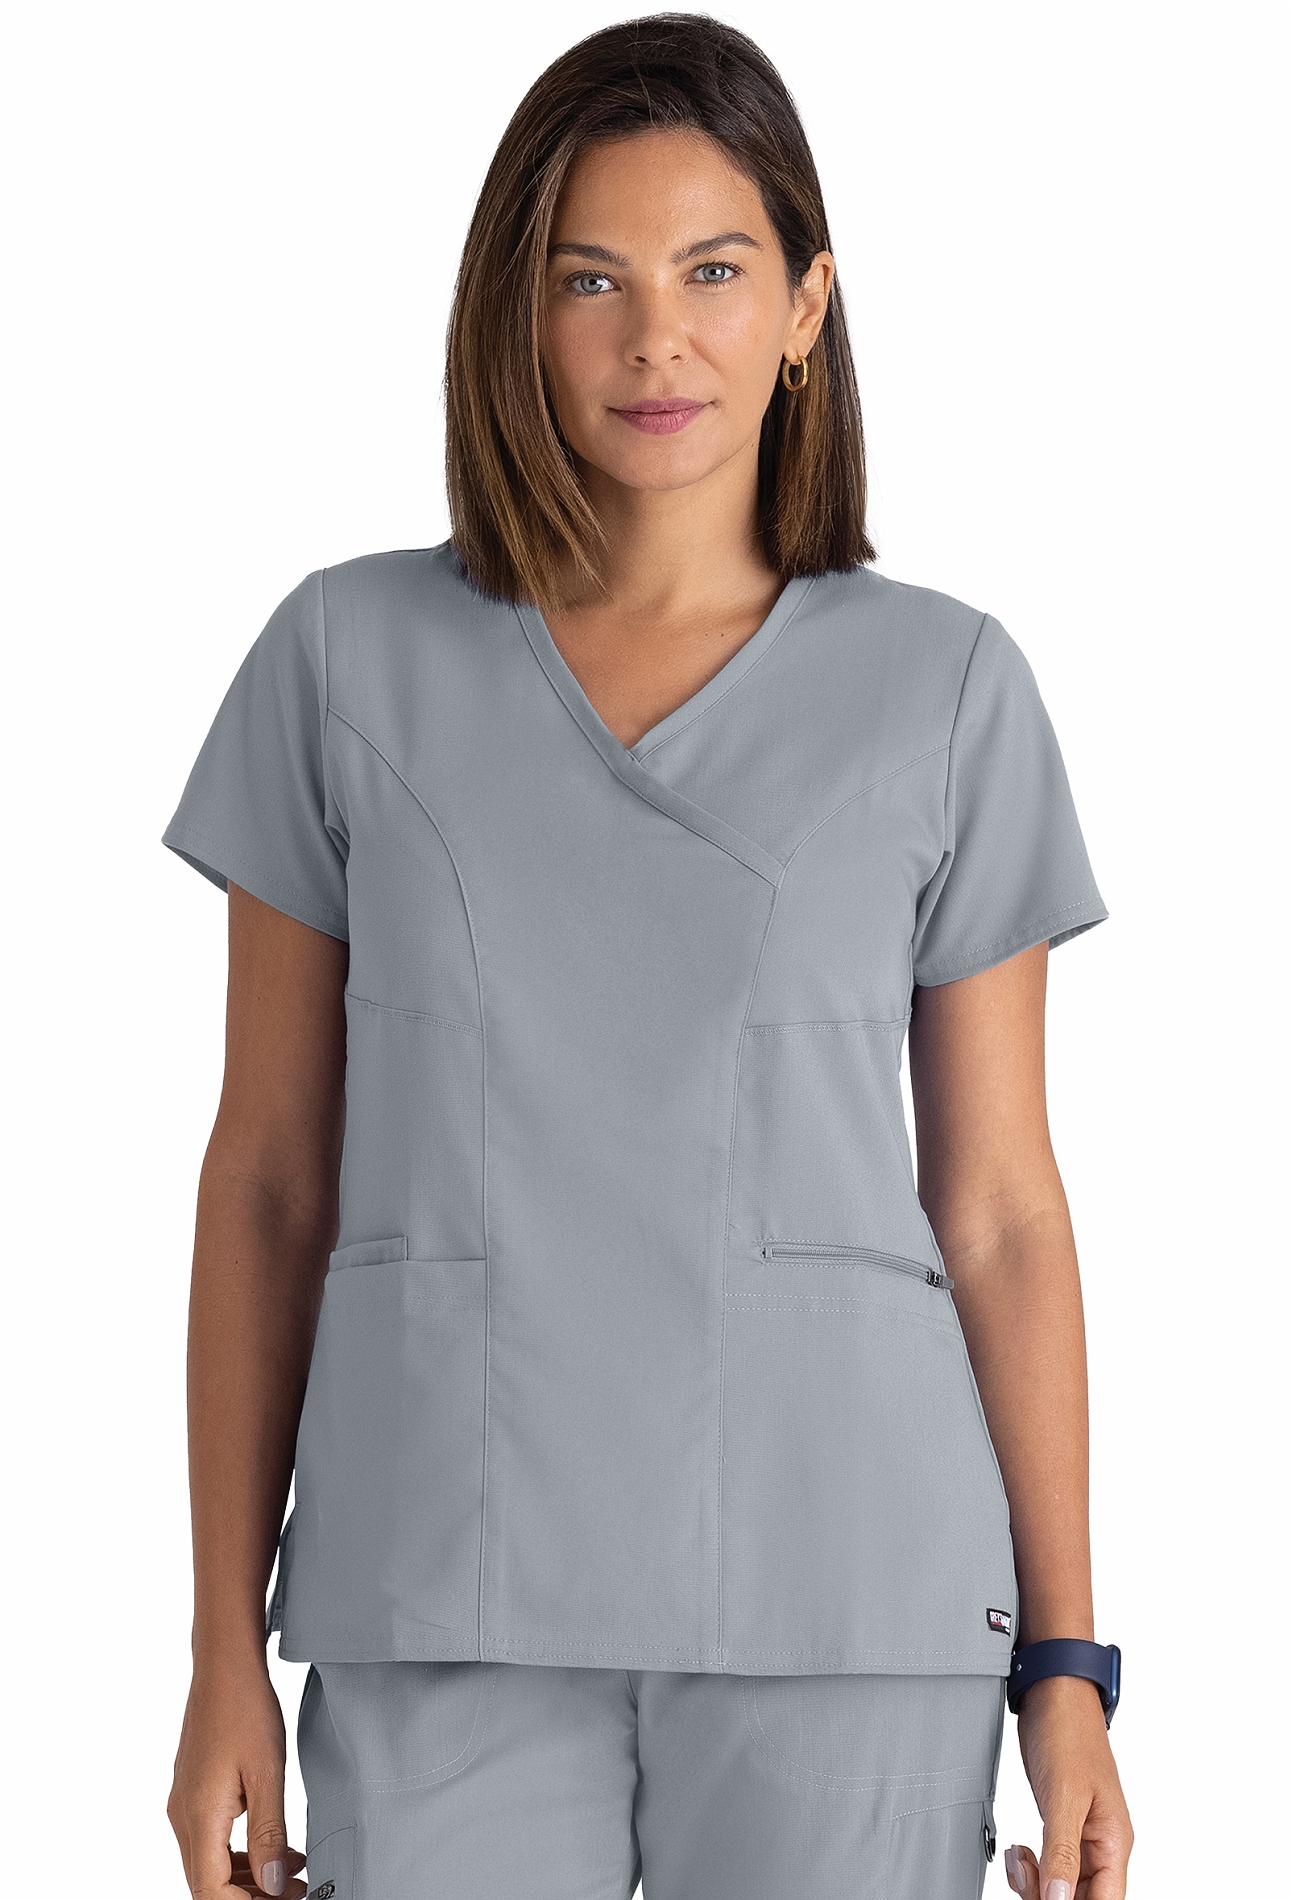 Greys Anatomy: Women's Drawstring Scrub Pant, Discount Greys Anatomy  Nursing Scrubs and Medical Uniforms